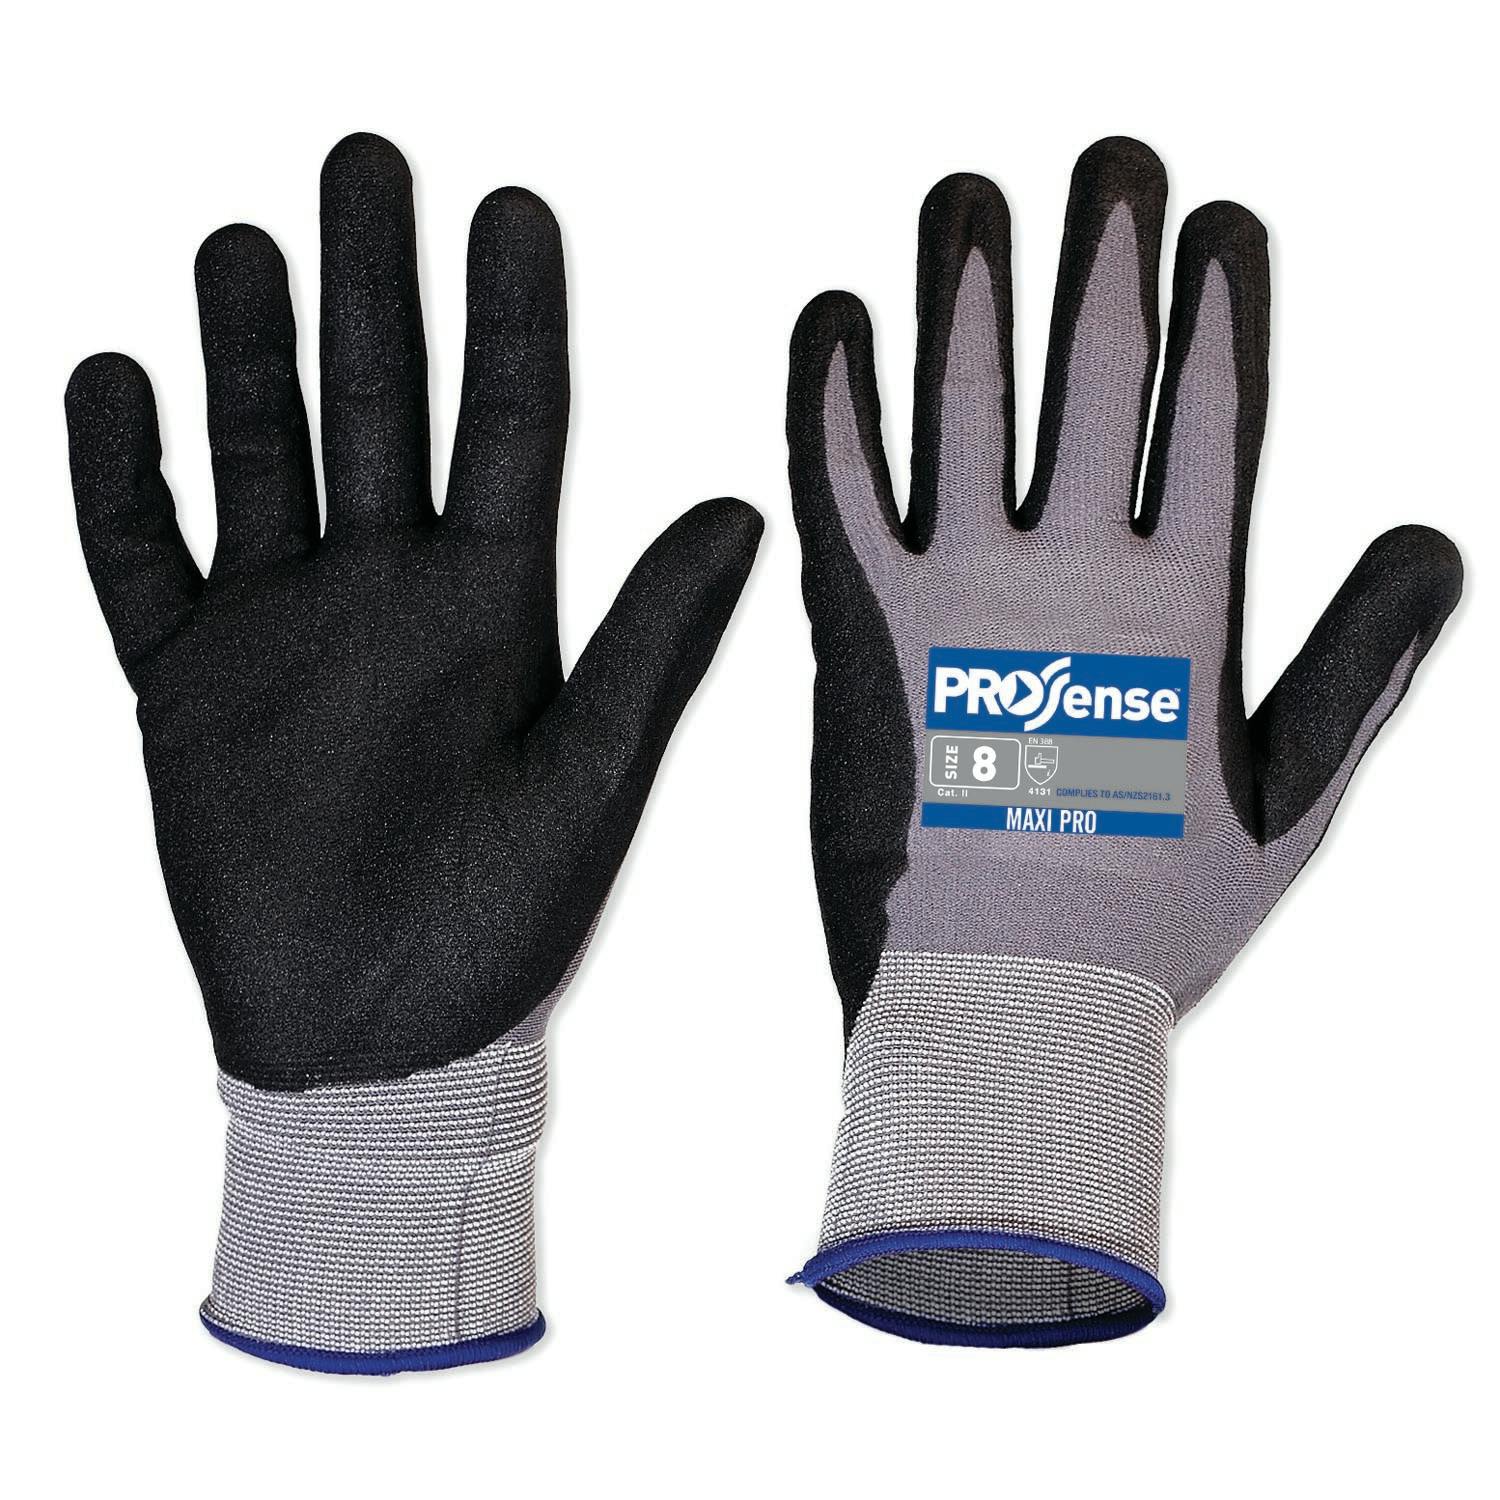 Pro Choice Prosense Maxi-Pro Gloves_2